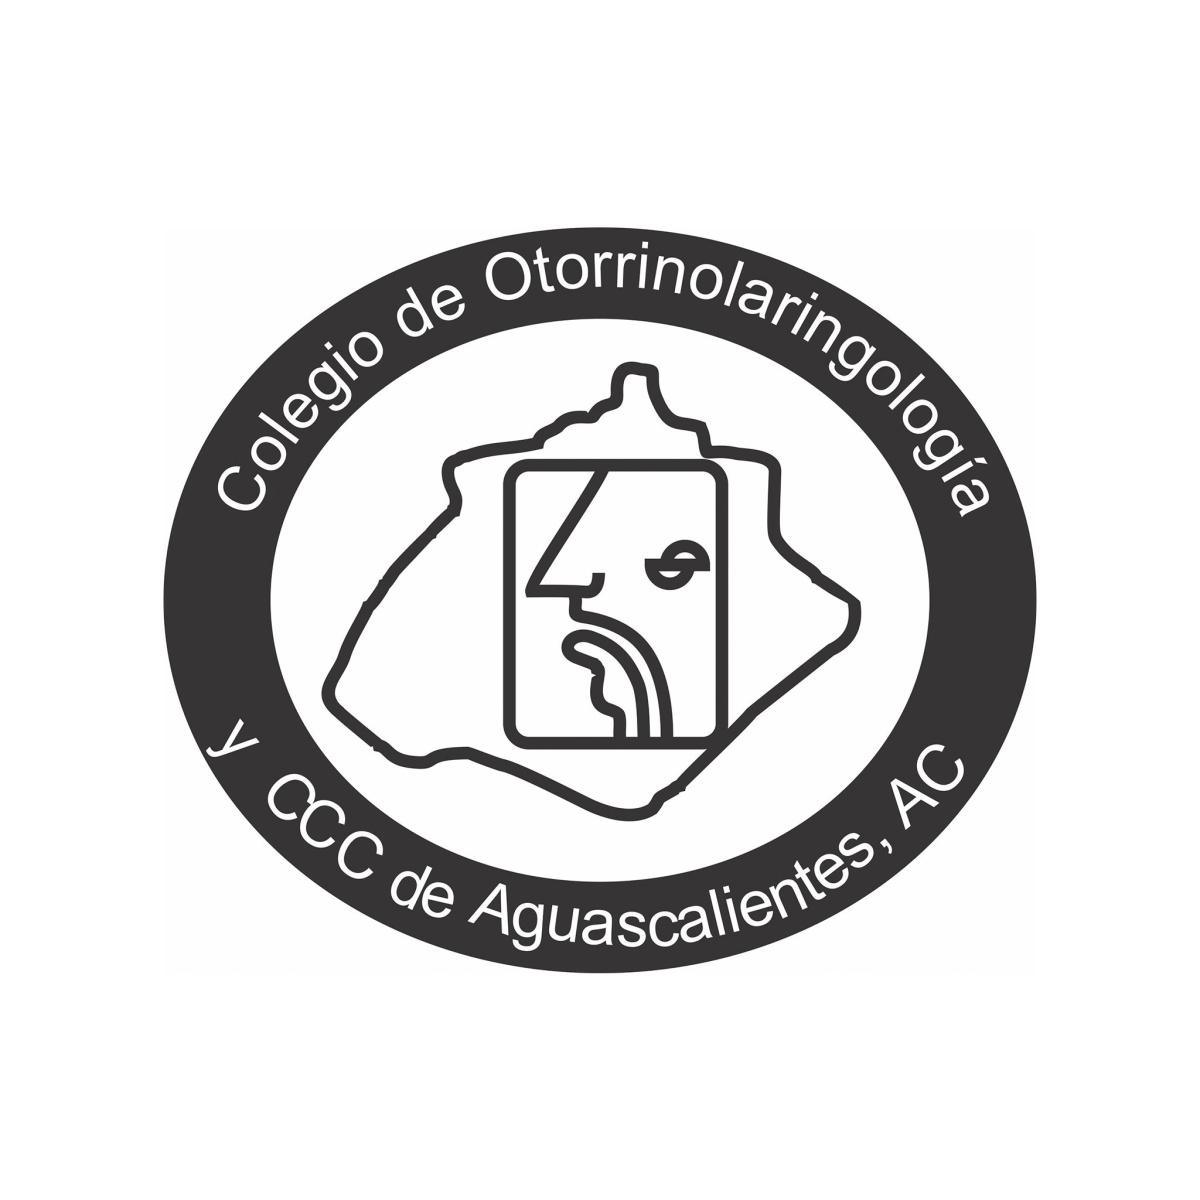 Colegio de Otorrinolaringología y CCC de Aguascalientes, AC